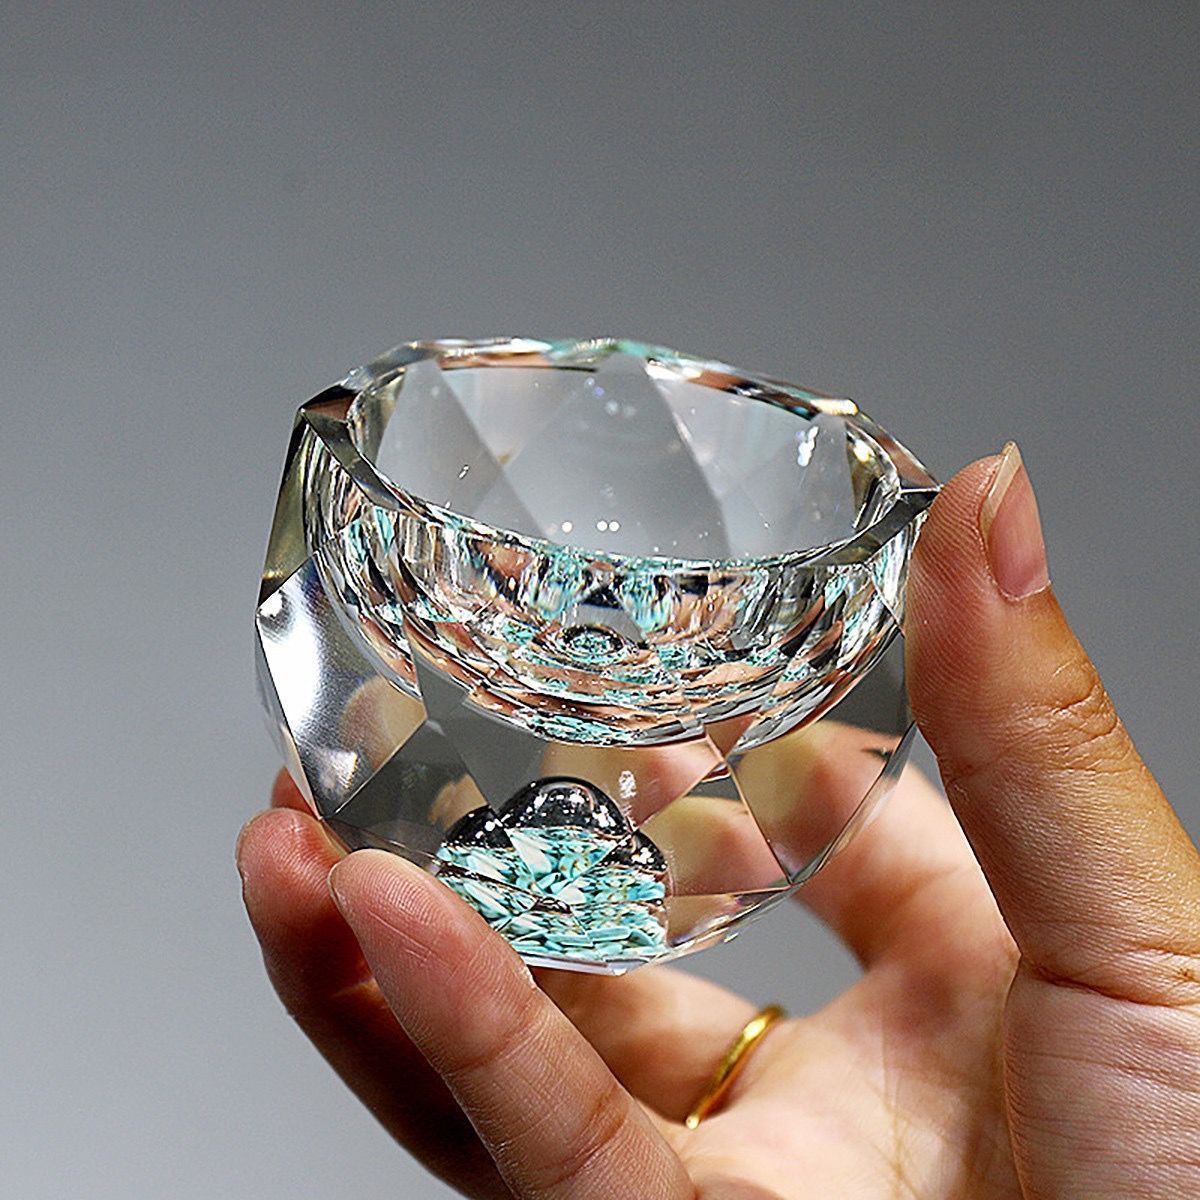 50 ml diamantskæring krystal spiritus briller vodka skud glas vinglas whisky glas ånder skyld saju brandy te cup